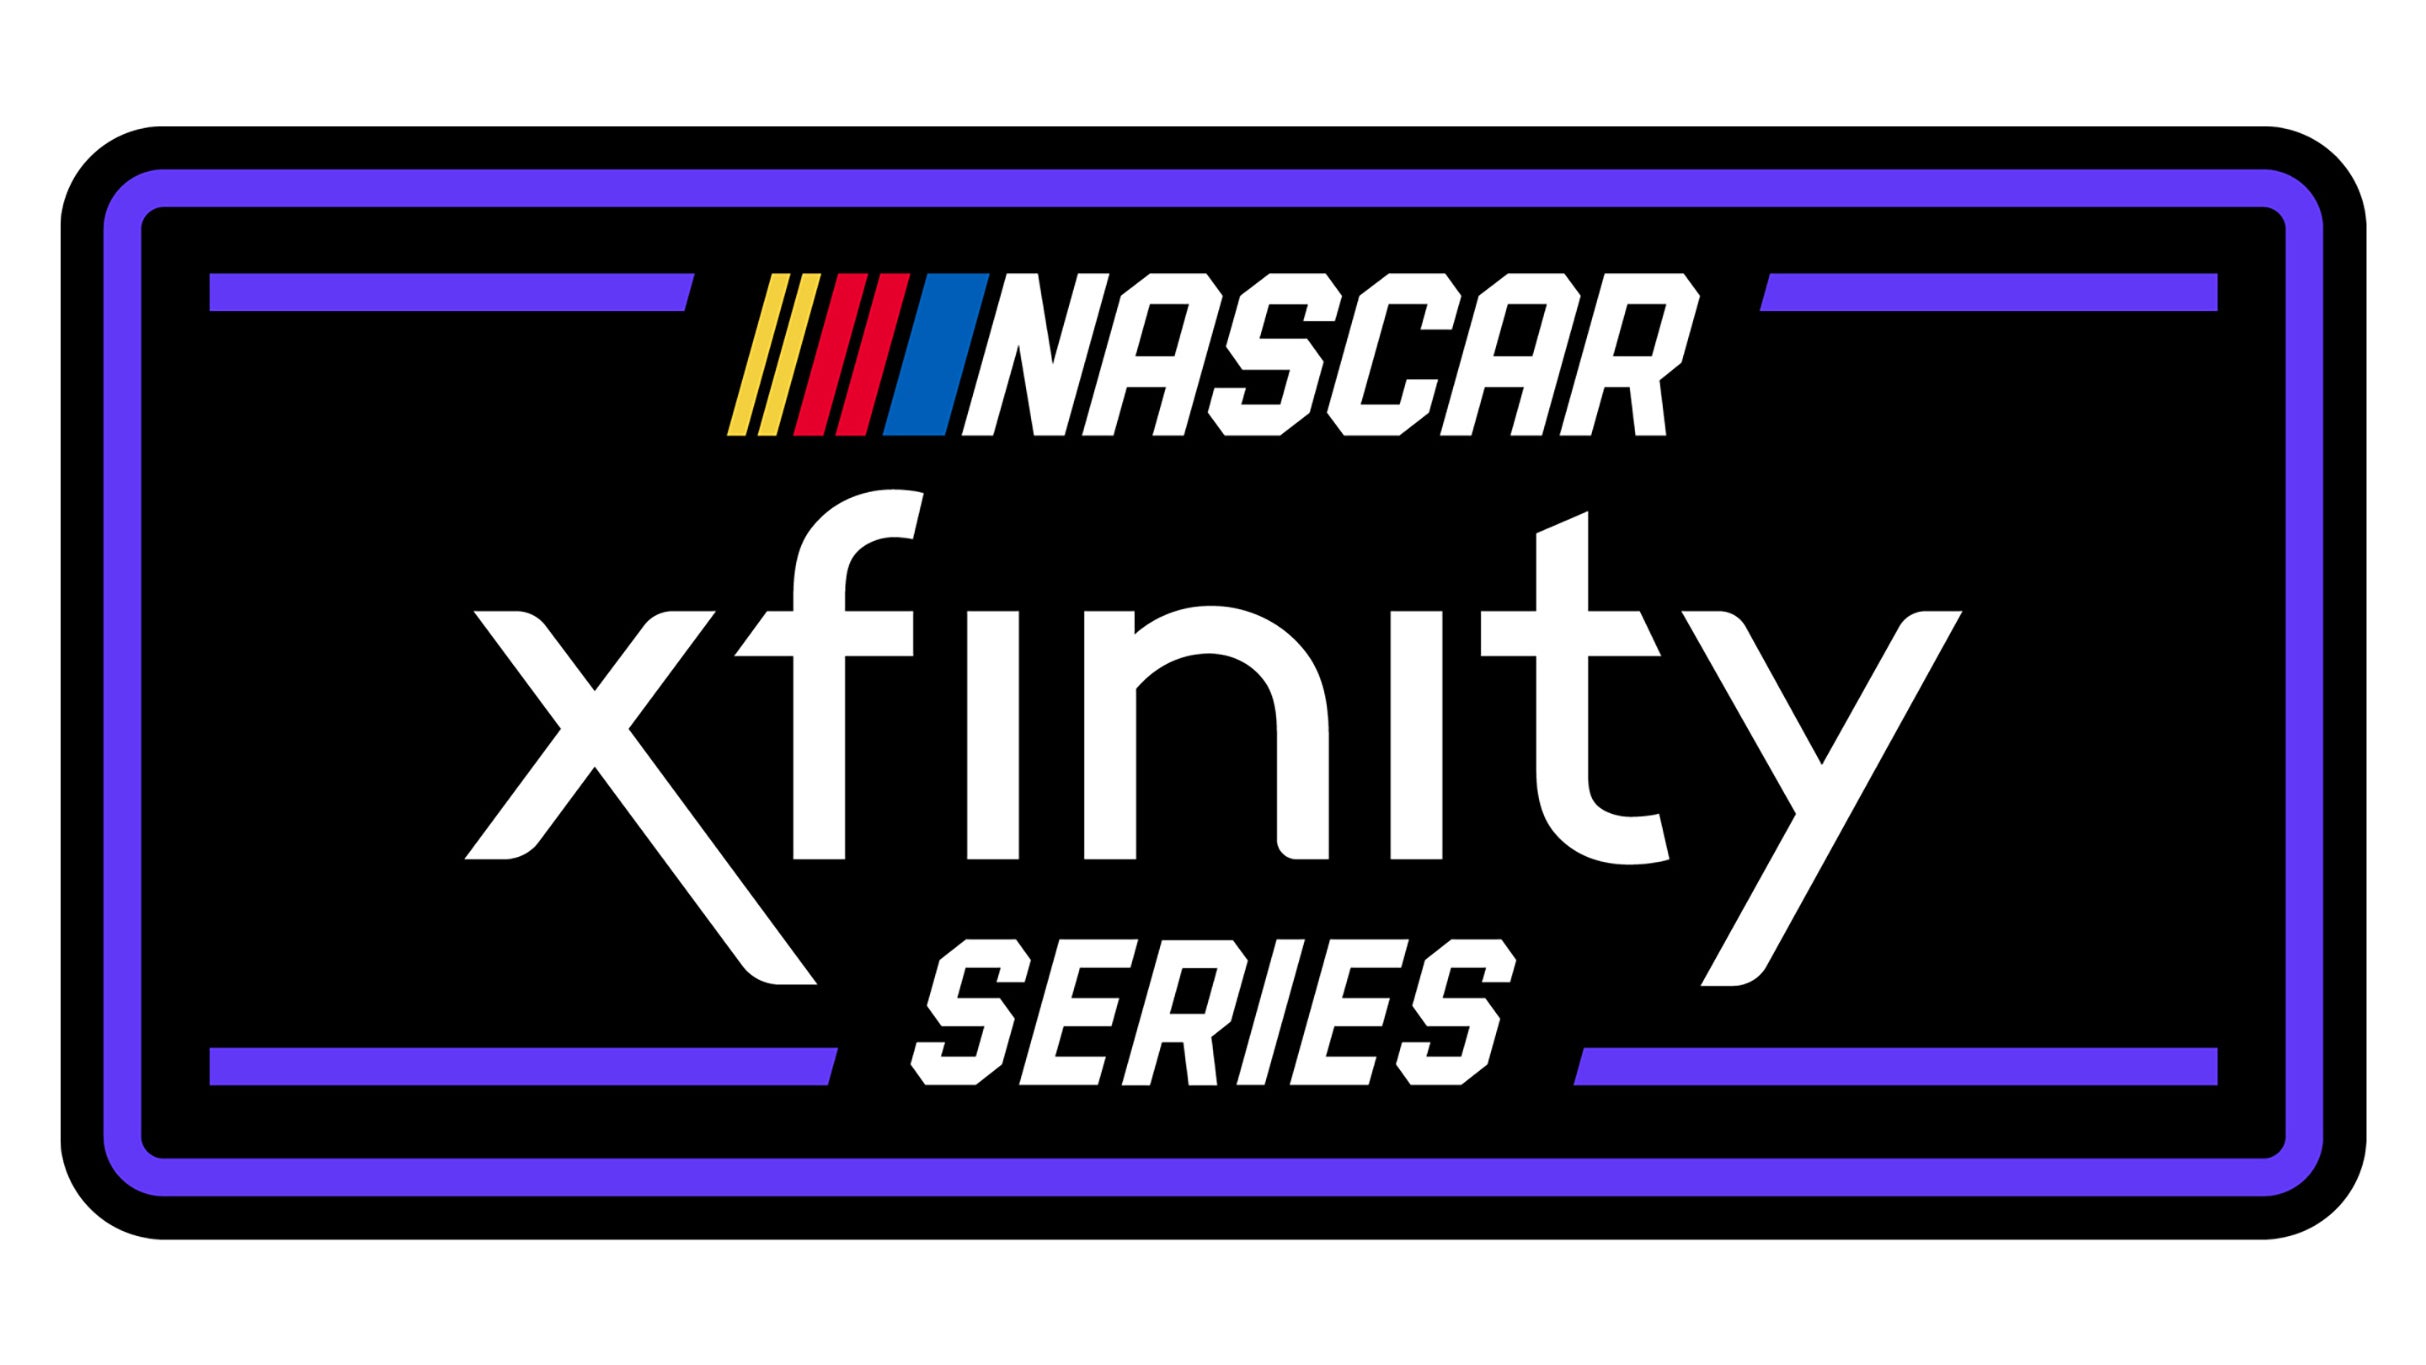 NASCAR Xfinity Series Race at Kansas Speedway